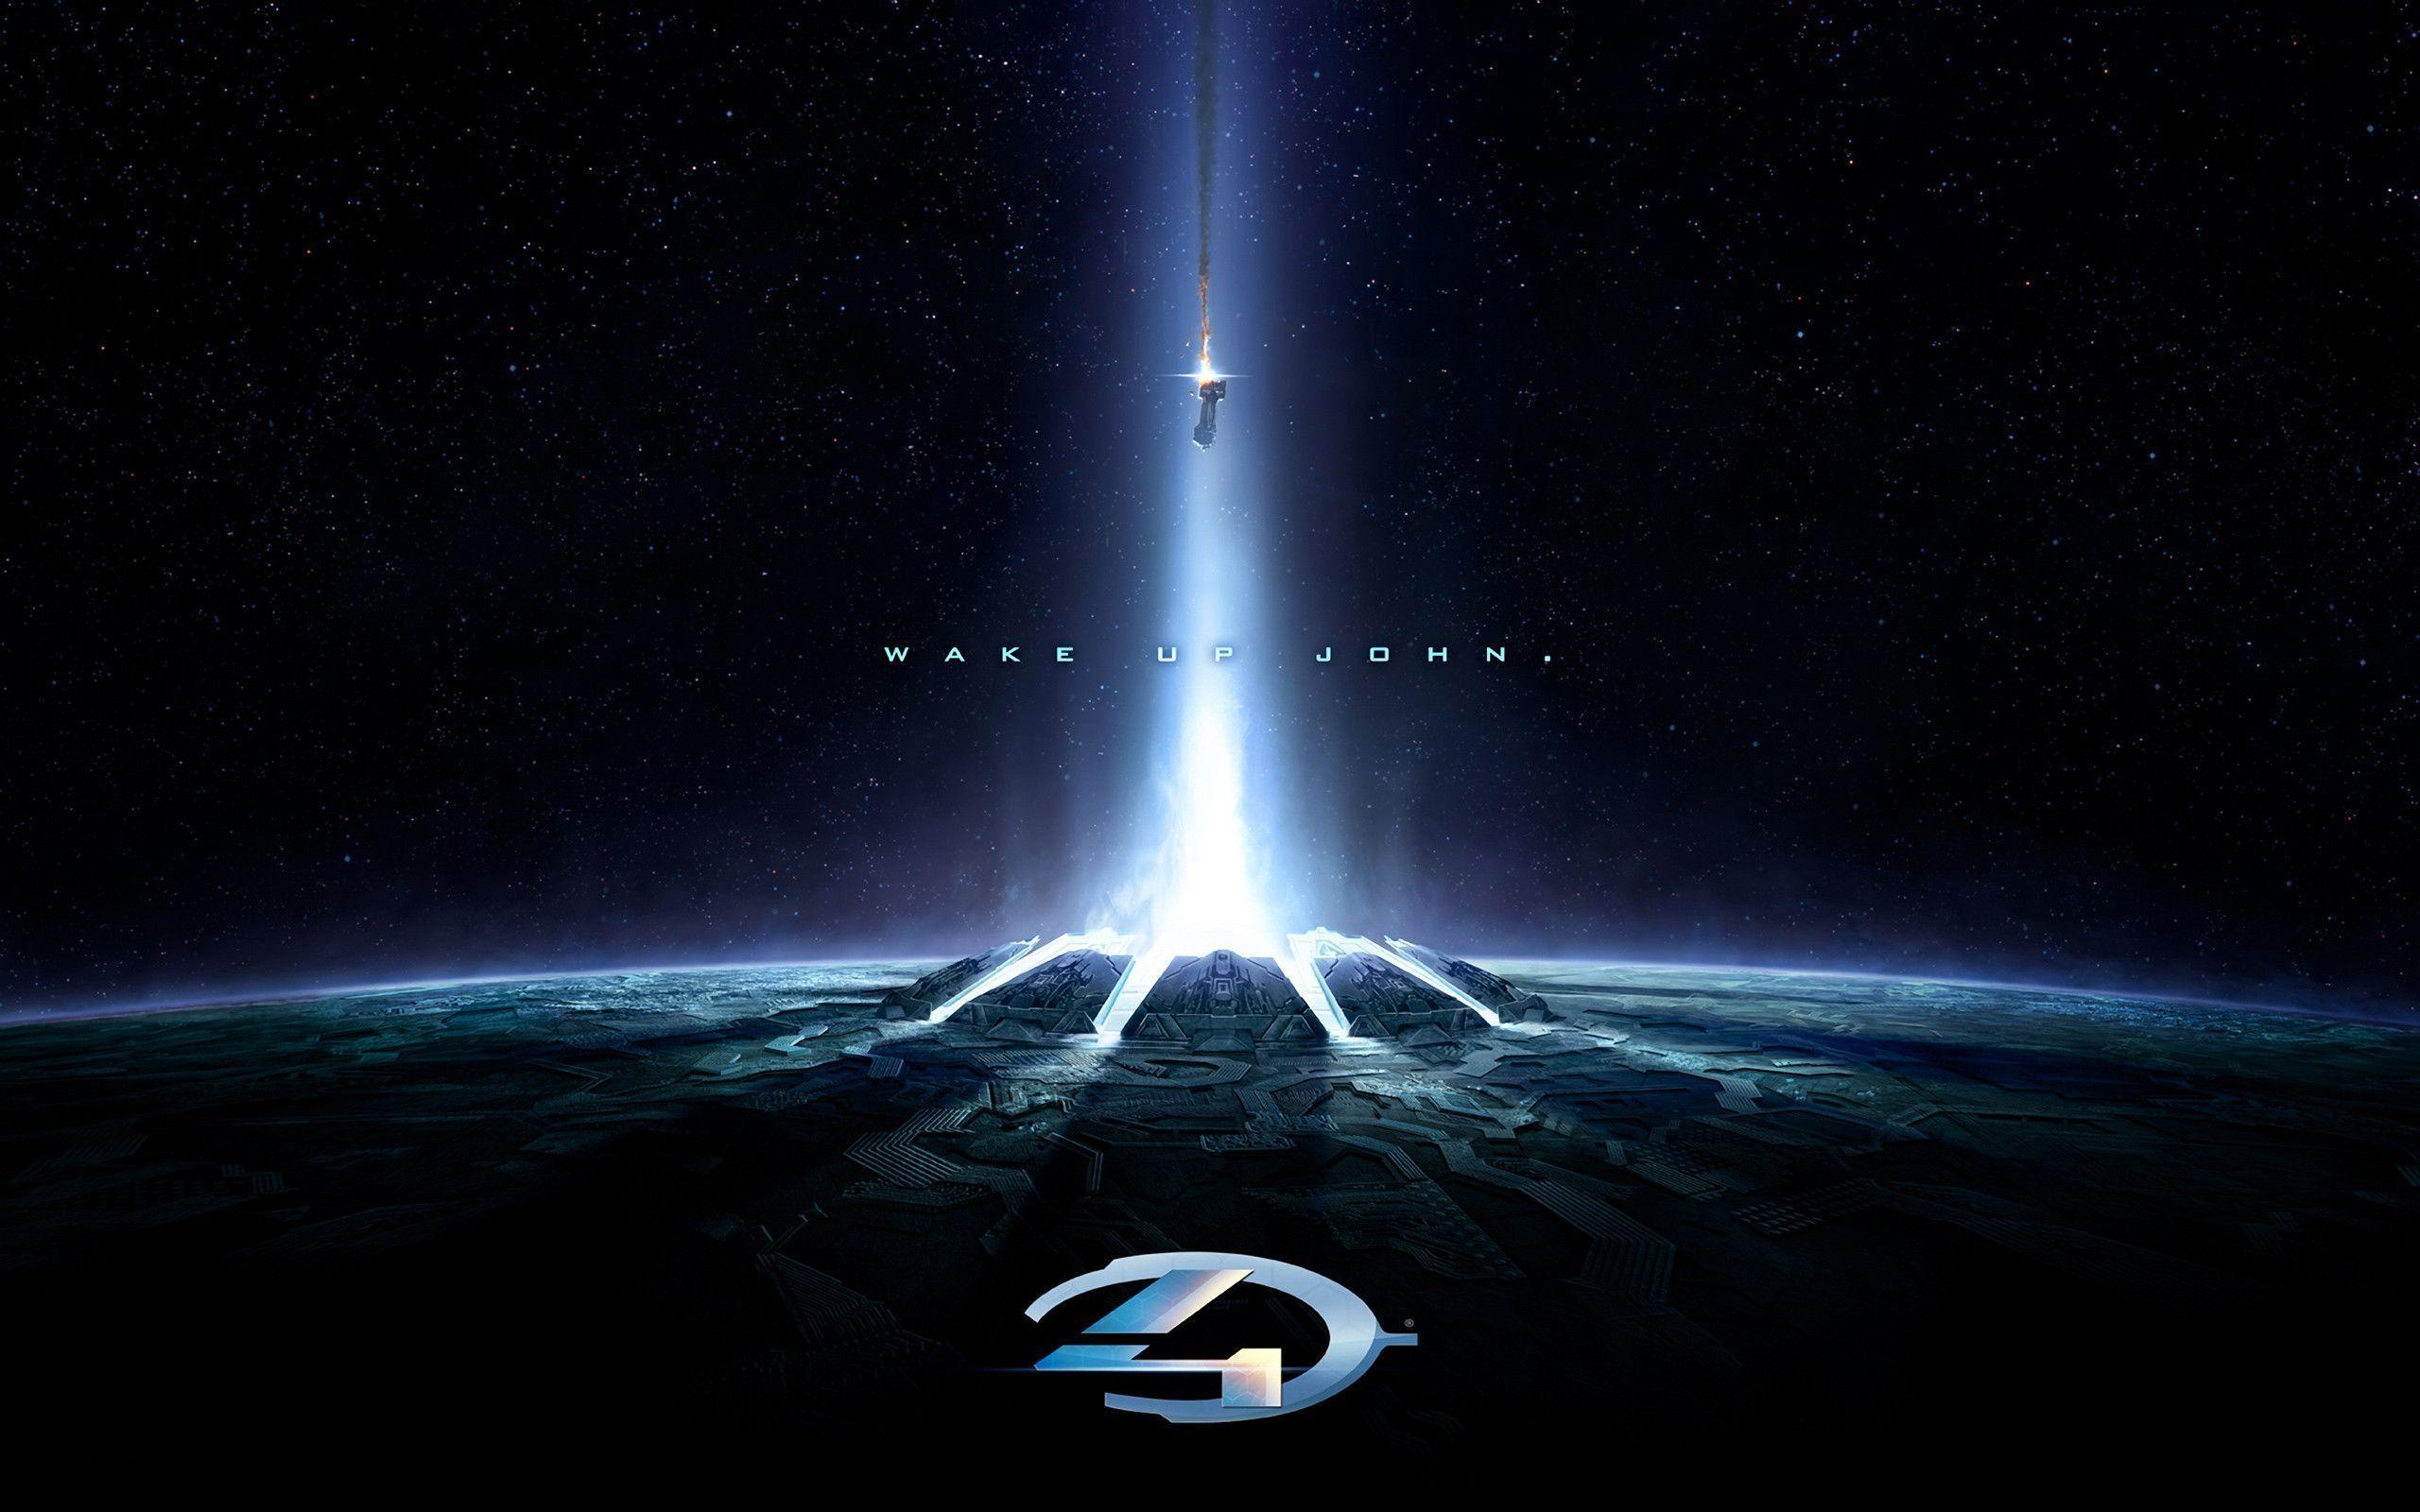 Halo 4 2012 Wallpaper